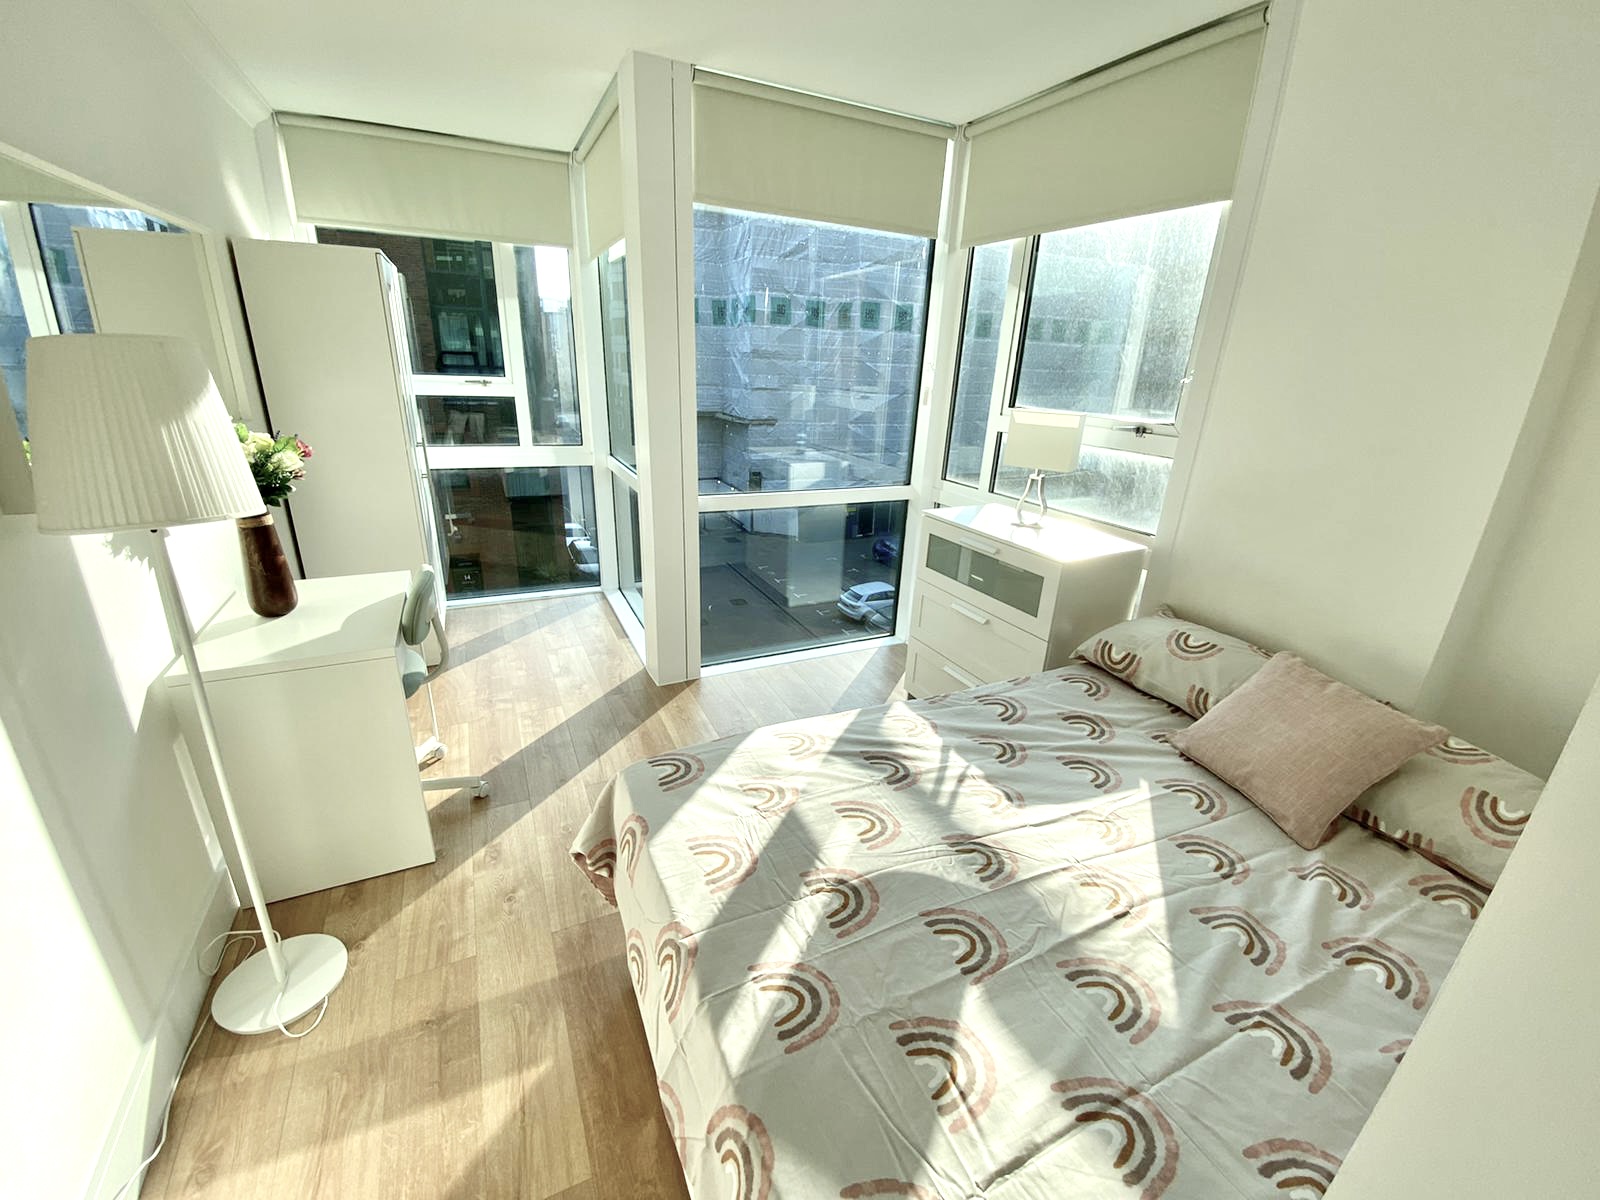 JMS Lifestyle - 3 bedroom flat in Bermondsey